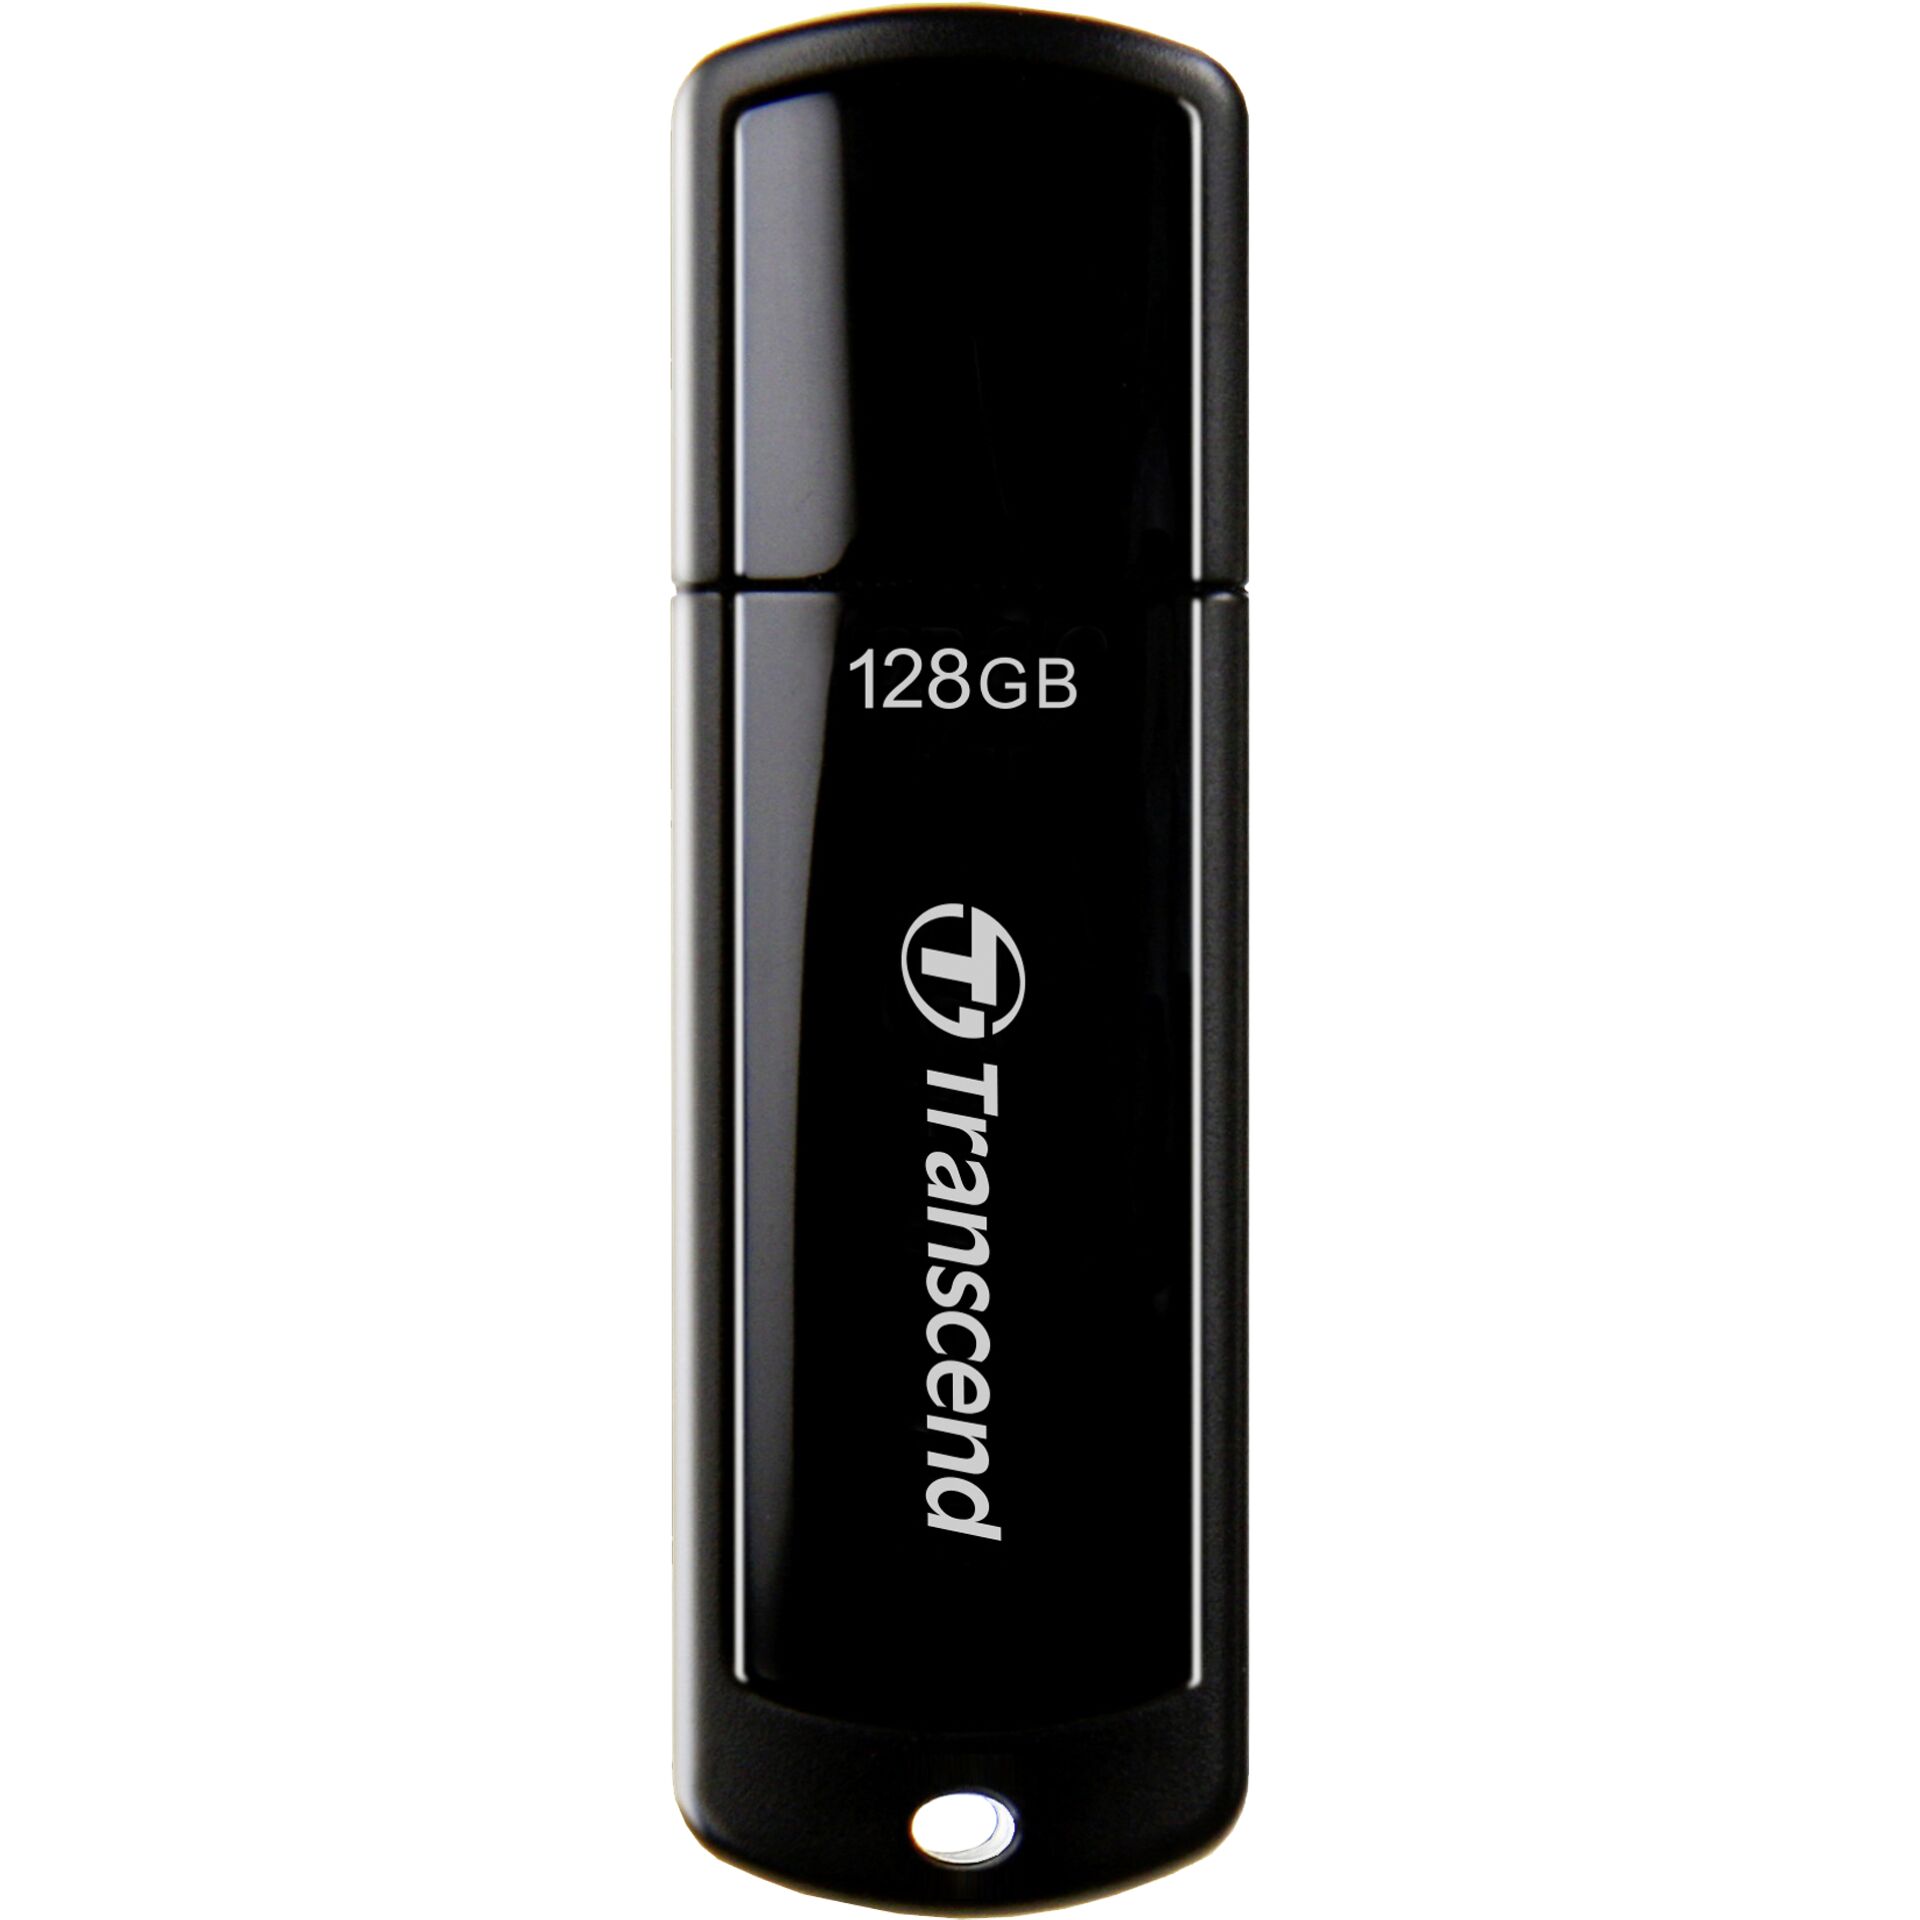 128 GB Transcend JetFlash 700, USB 3.0 Stick lesen: 70MB/s, schreiben: 30MB/s